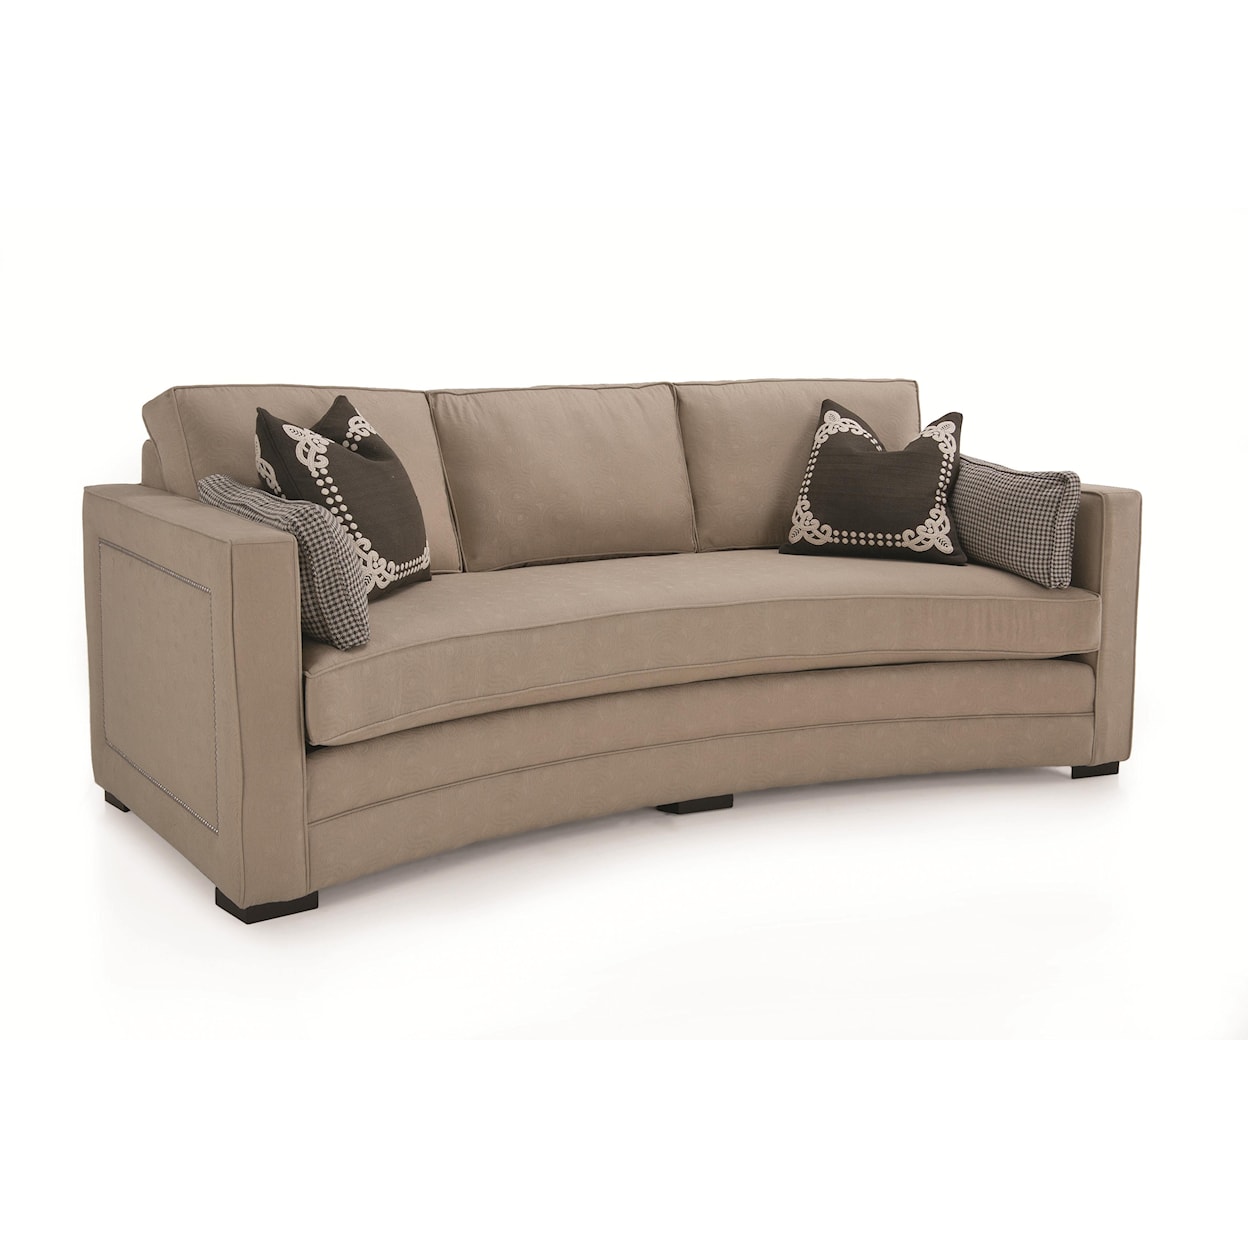 Decor-Rest Limited Edition - 9015 Sofa